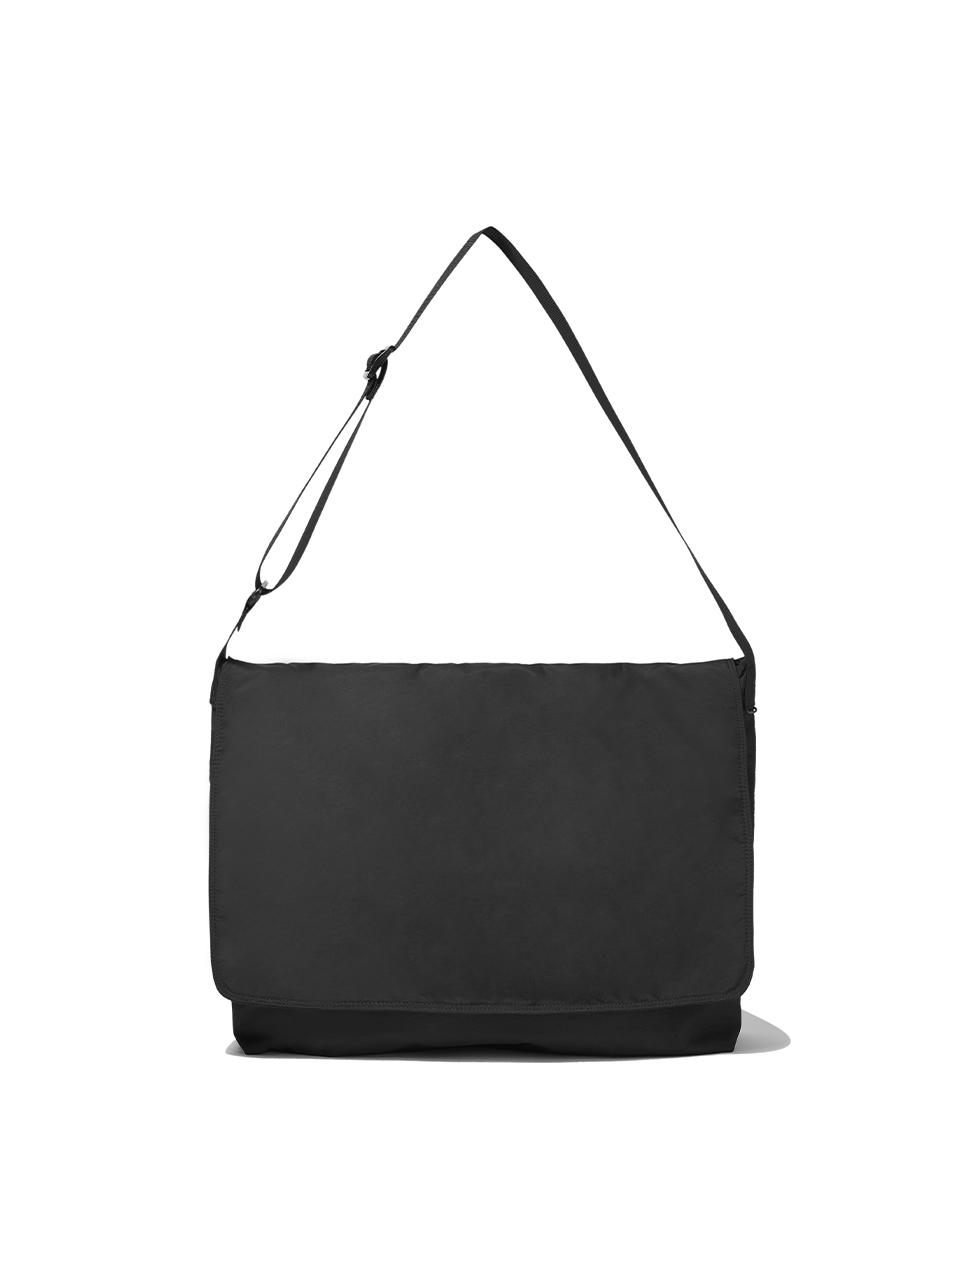 SOUNDSLIFE - Nylon Messenger Bag Black